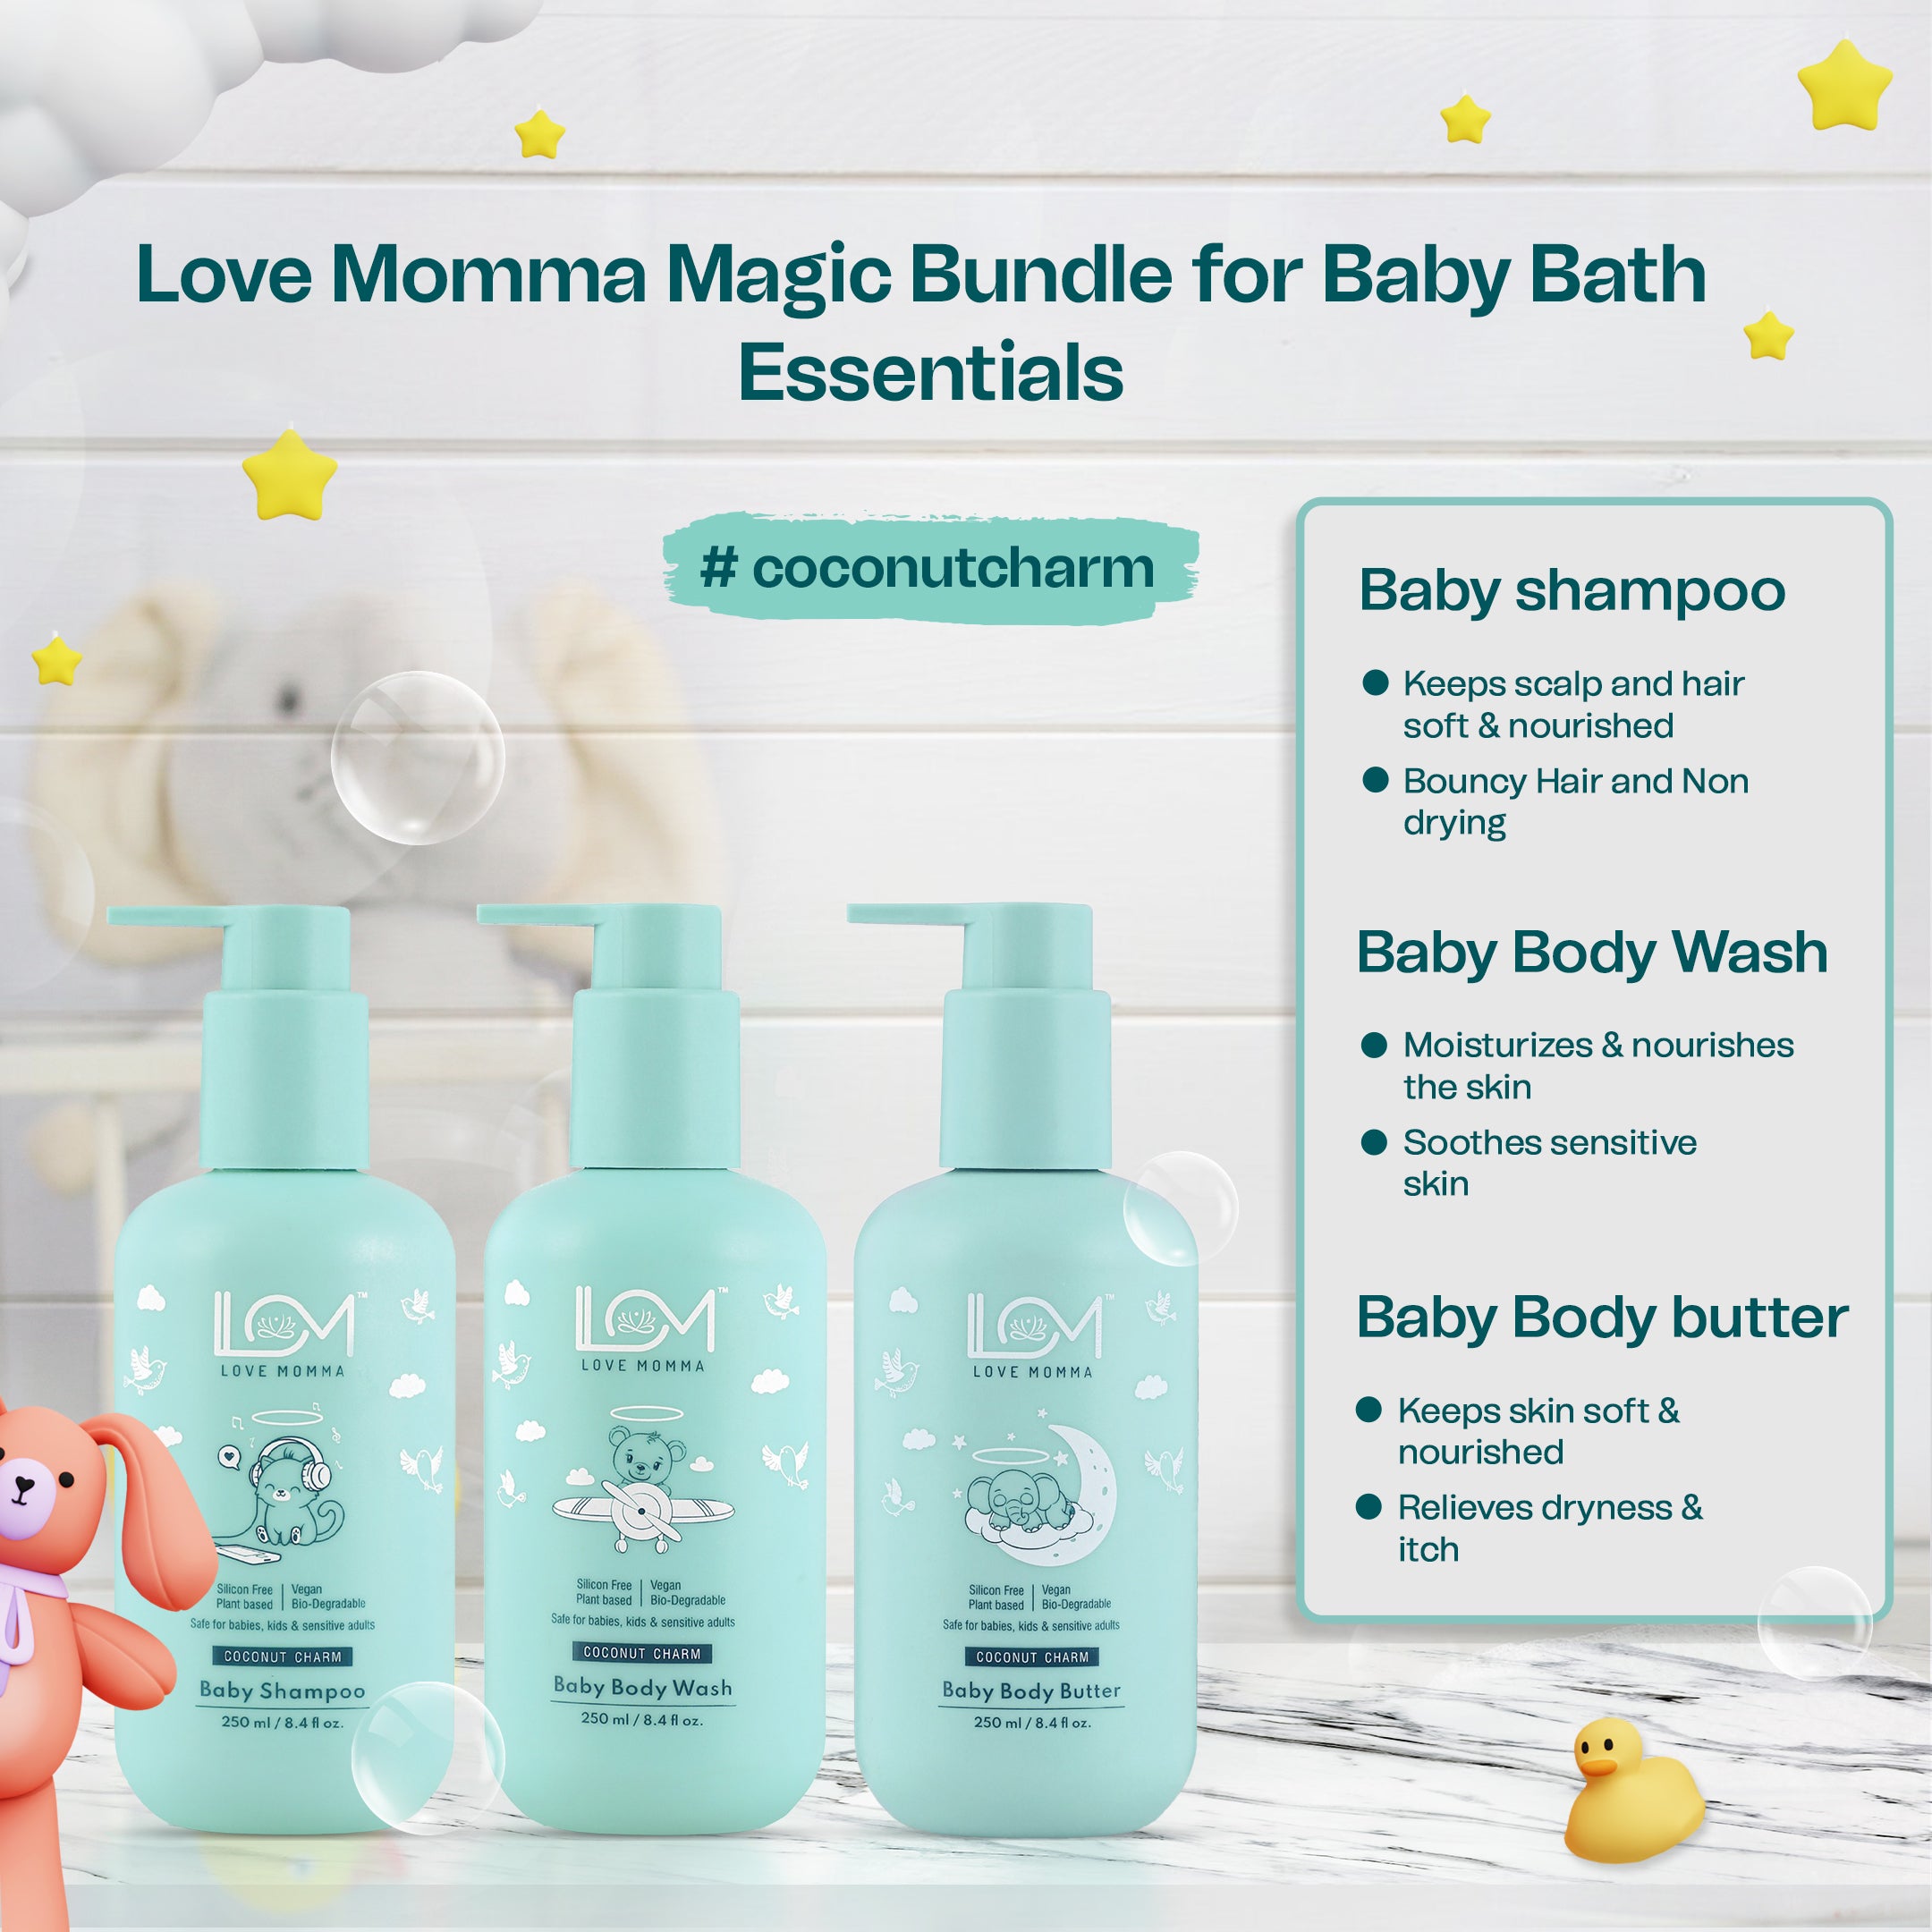 Baby Bath Essentials. Shop baby bath essentials including…, by The World  Boutique — Online Baby Boutique